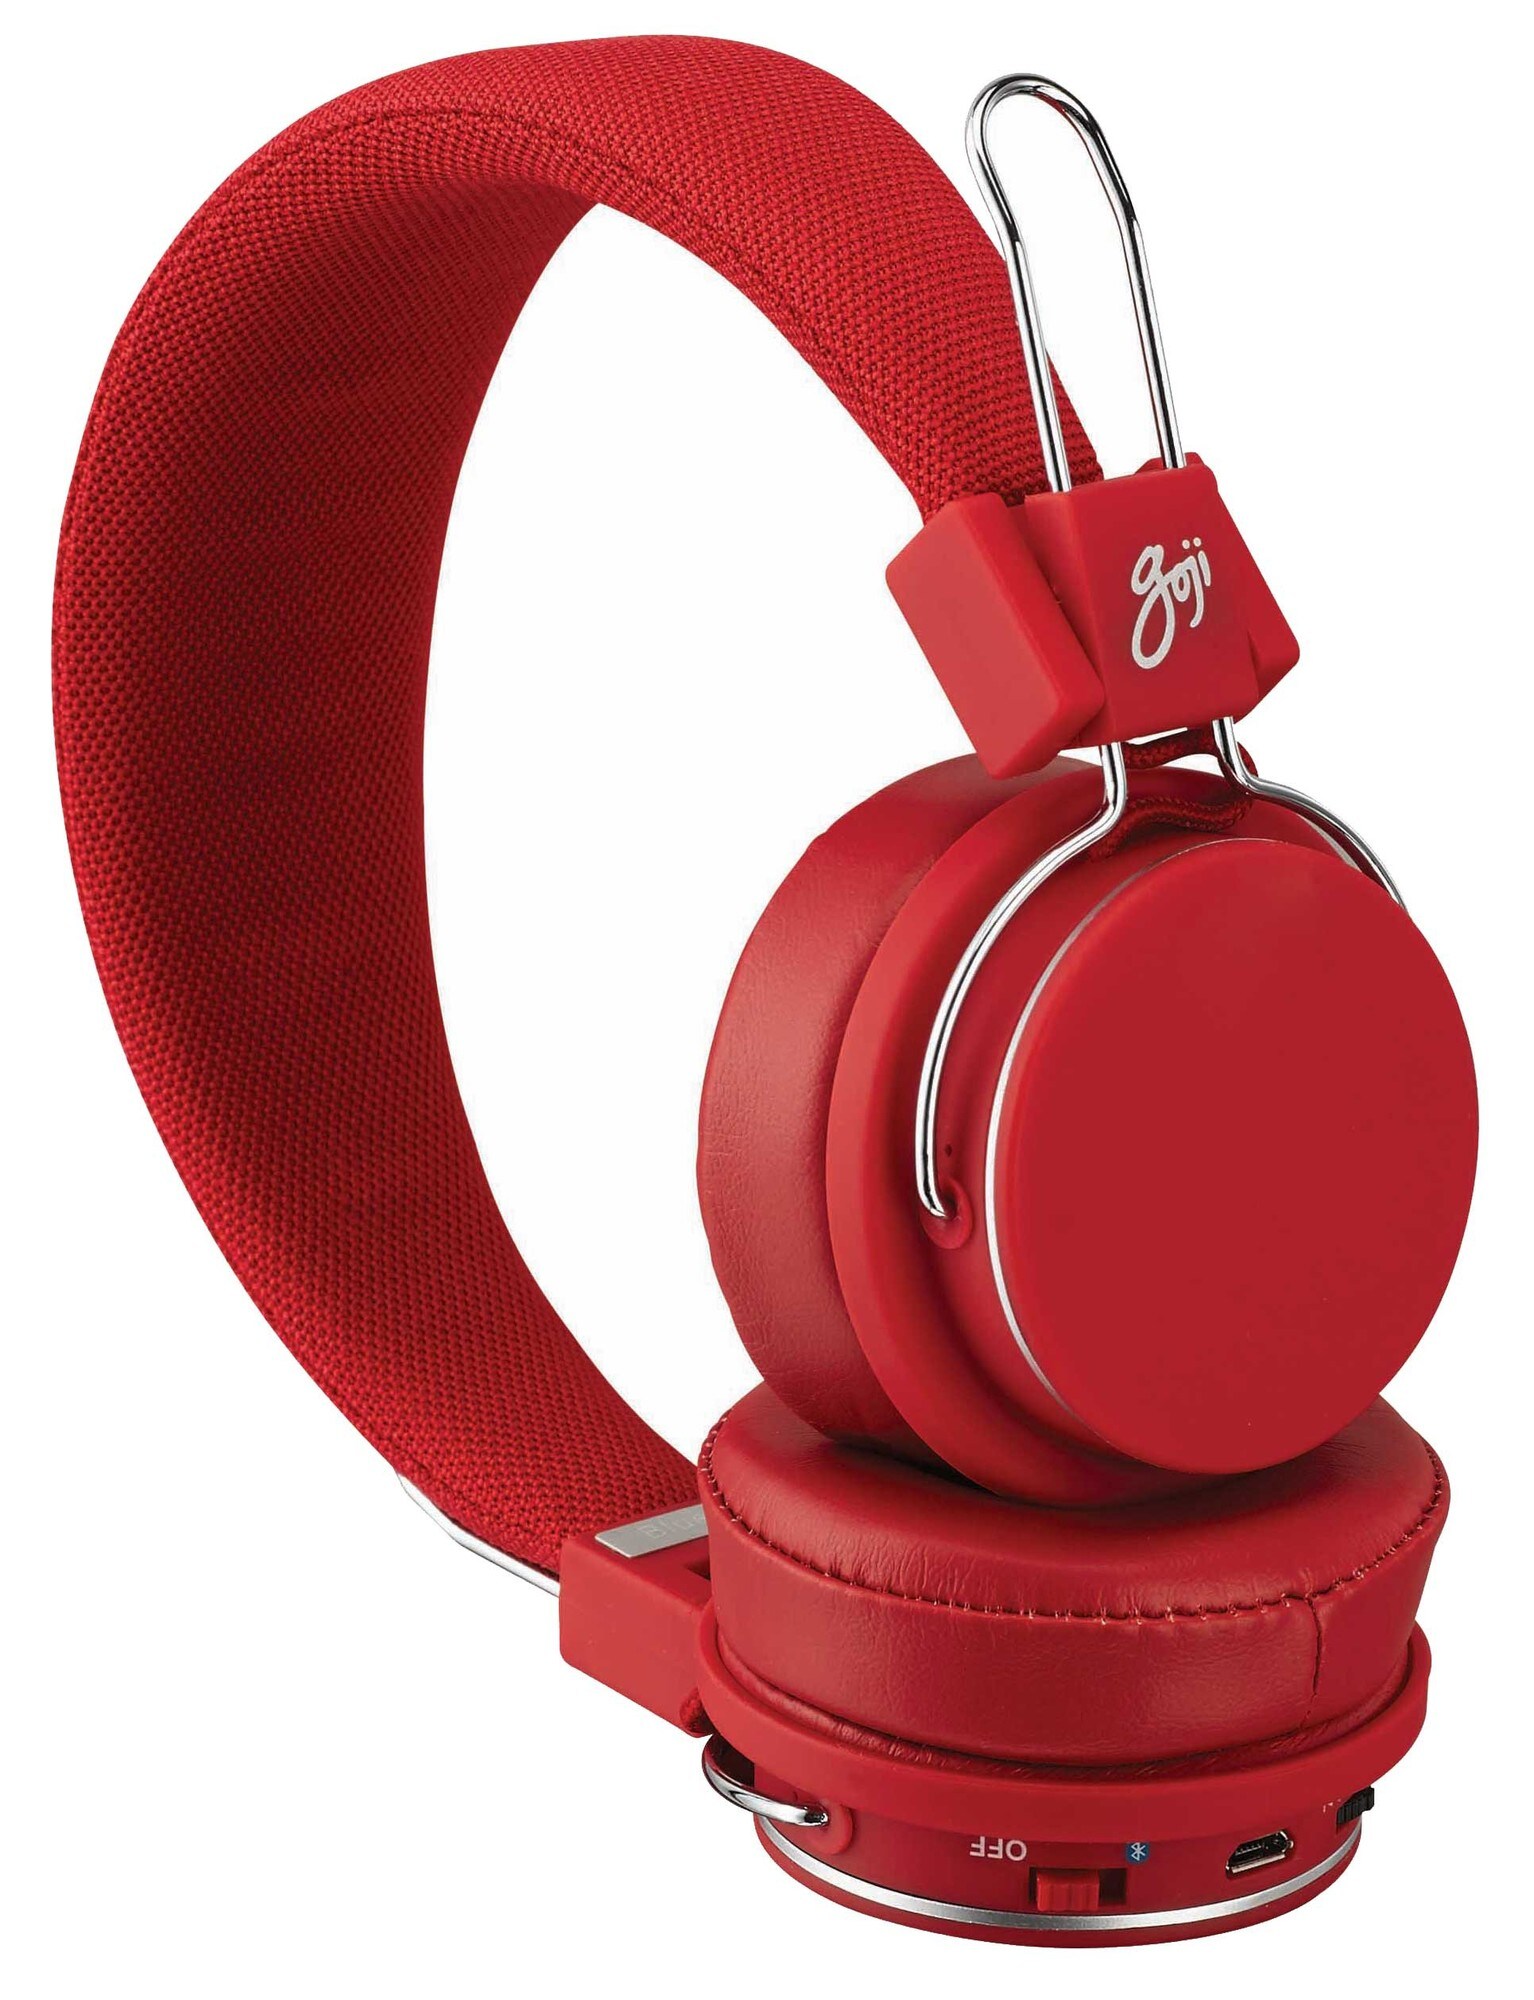 Goji on-ear hovedtelefoner - rød | Elgiganten